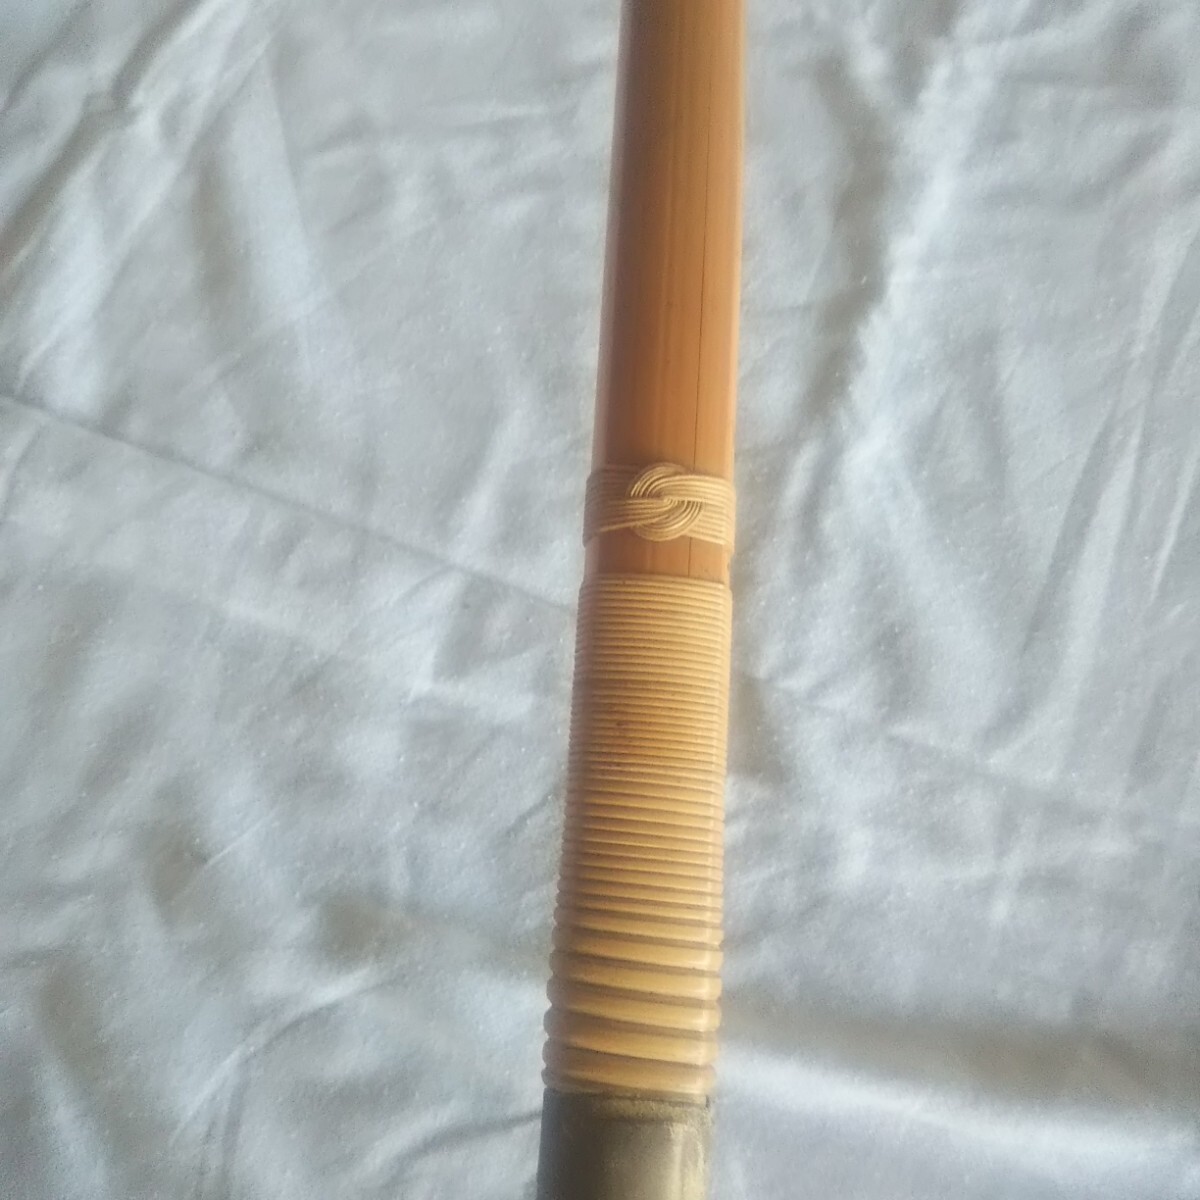  archery bamboo bow Zaimei pine . -ply Showa era bow 